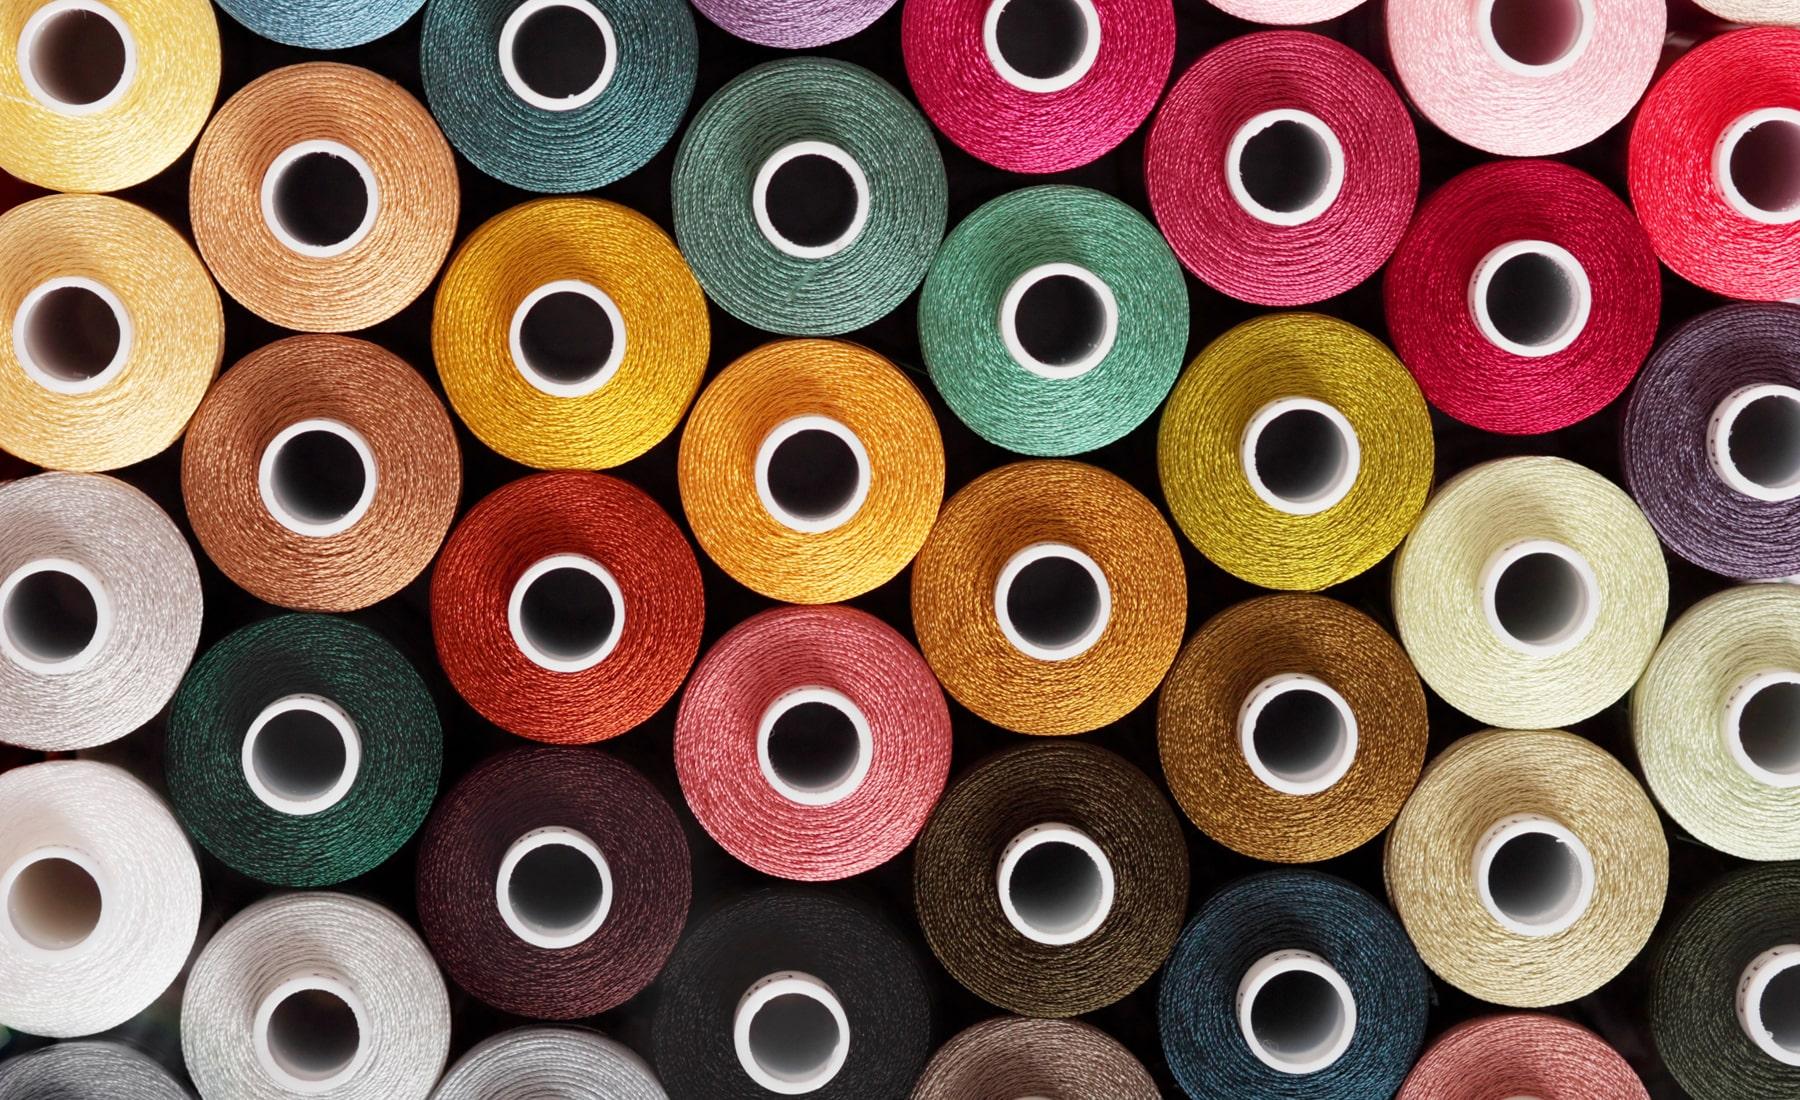 Product Fashion and Textiles - Kumi image